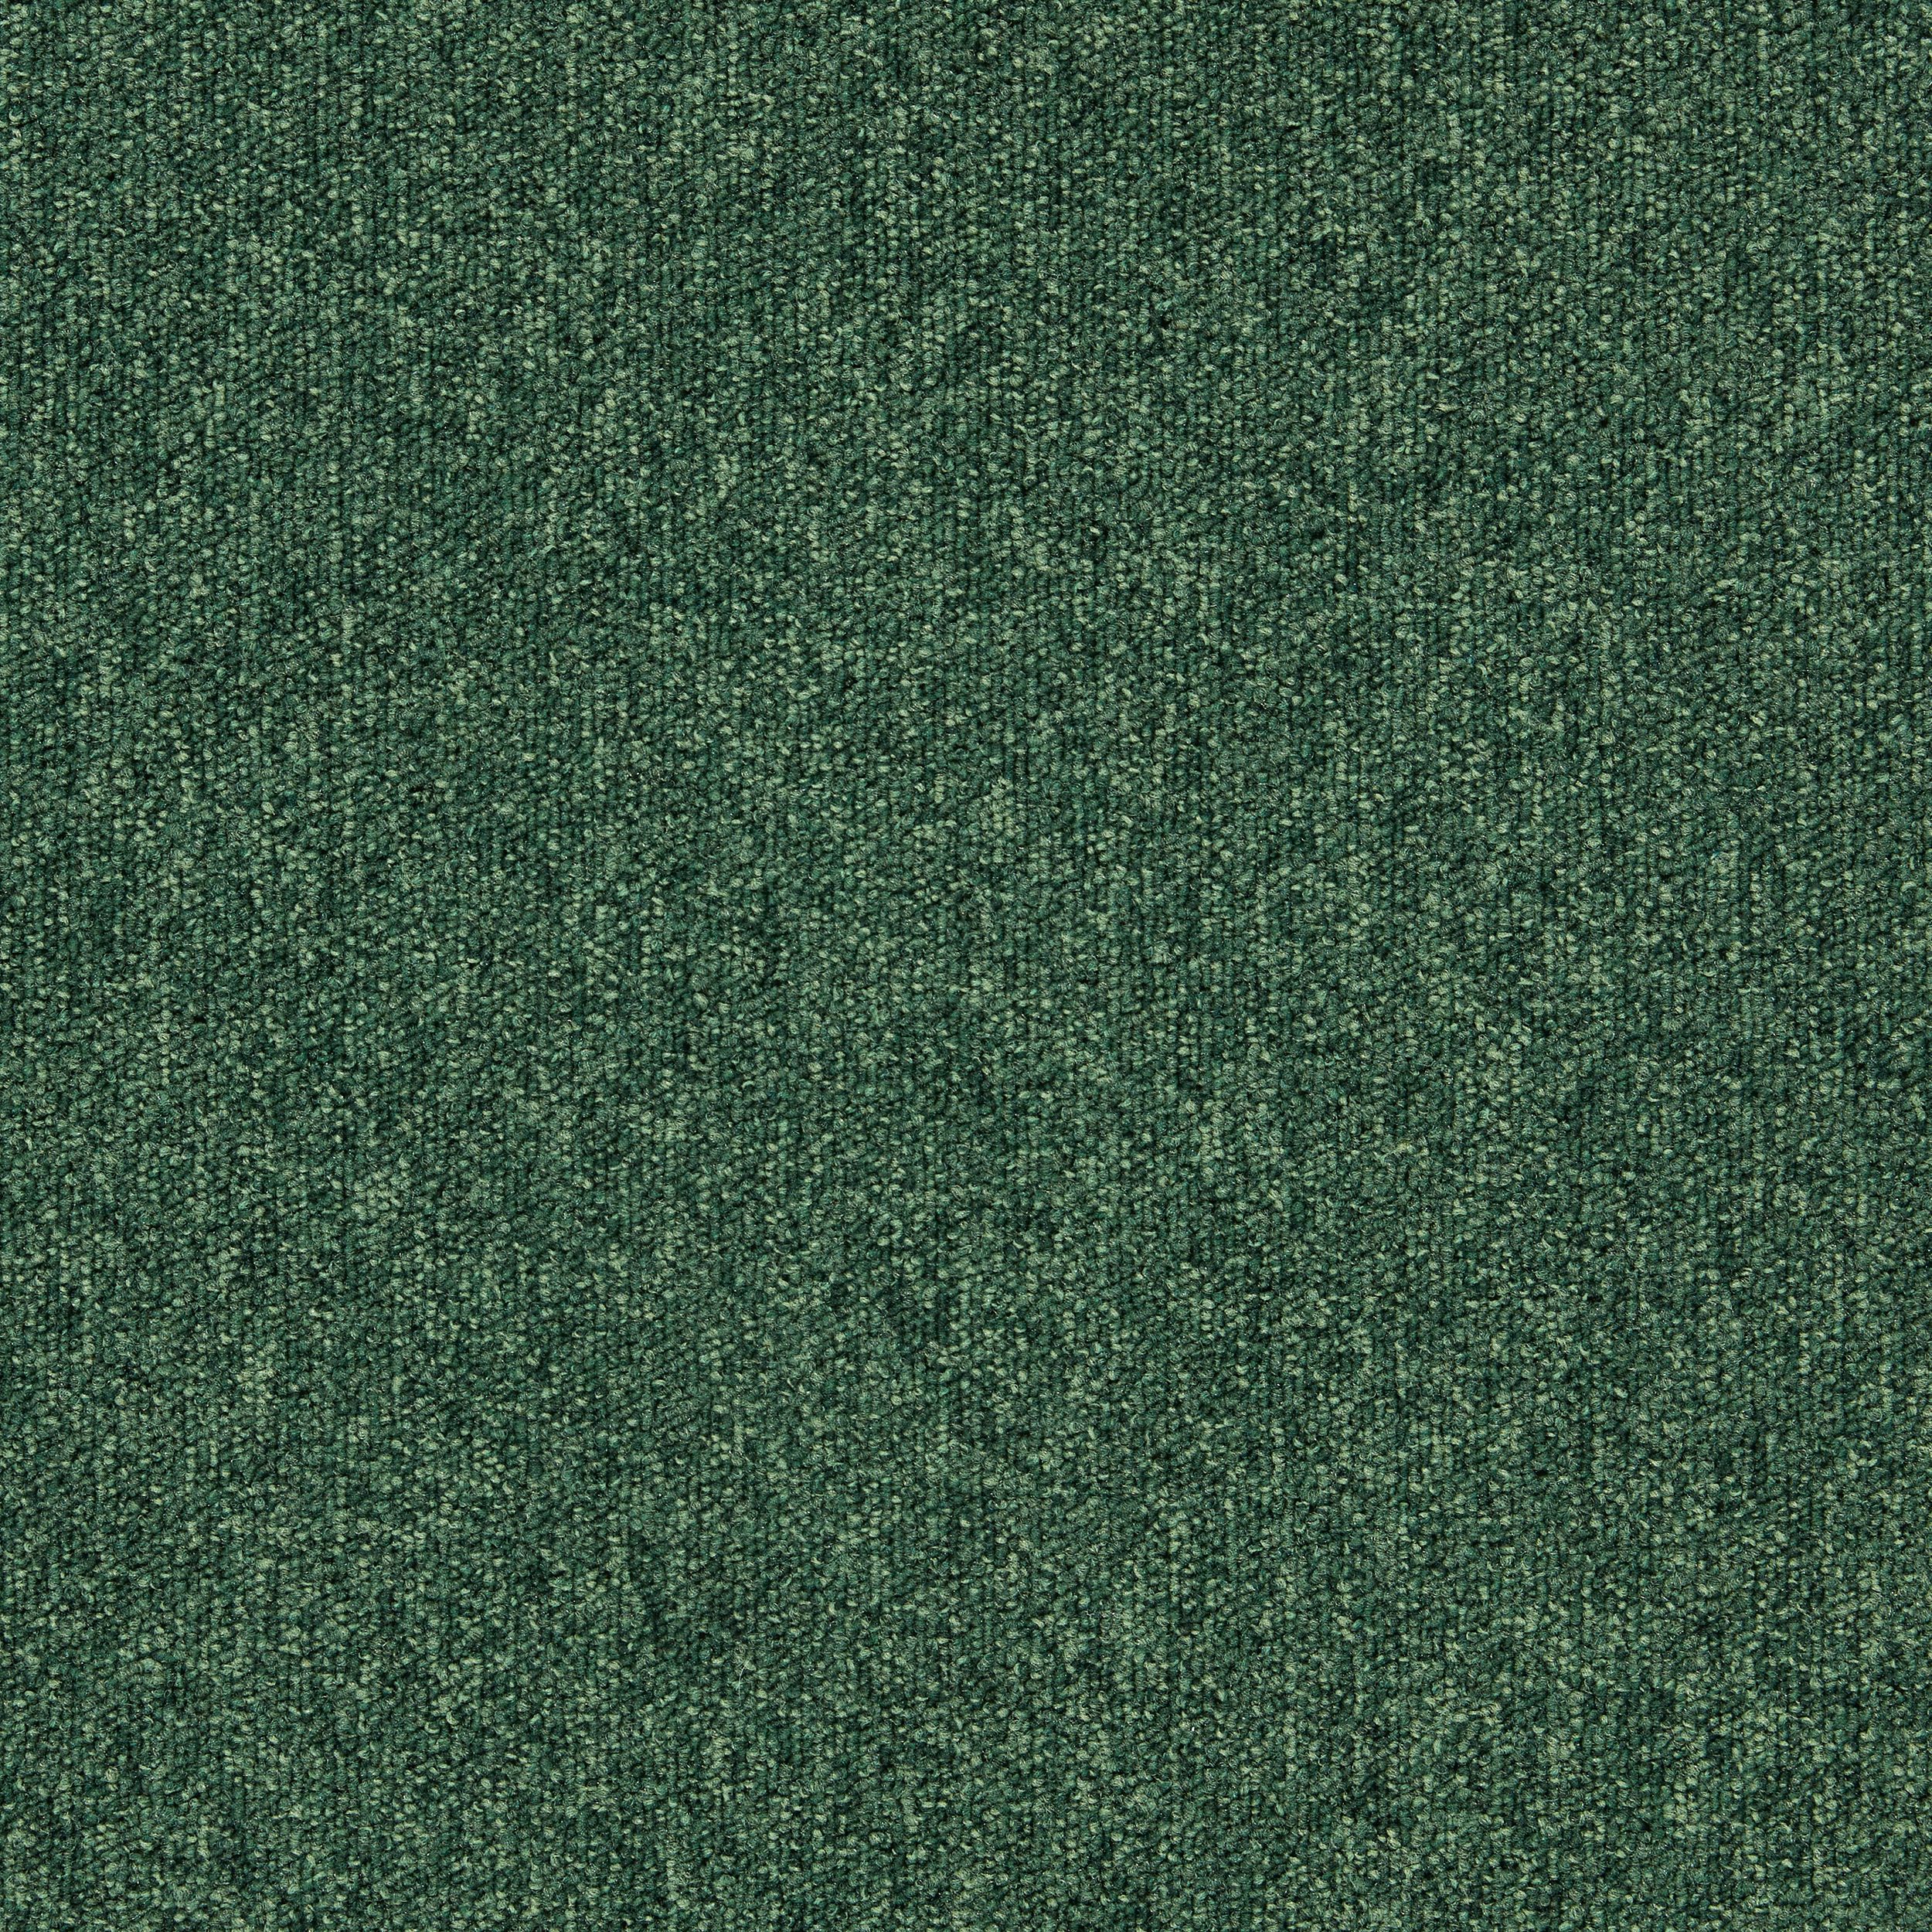 Heuga 727 Carpet Tile In Bottle Green número de imagen 2